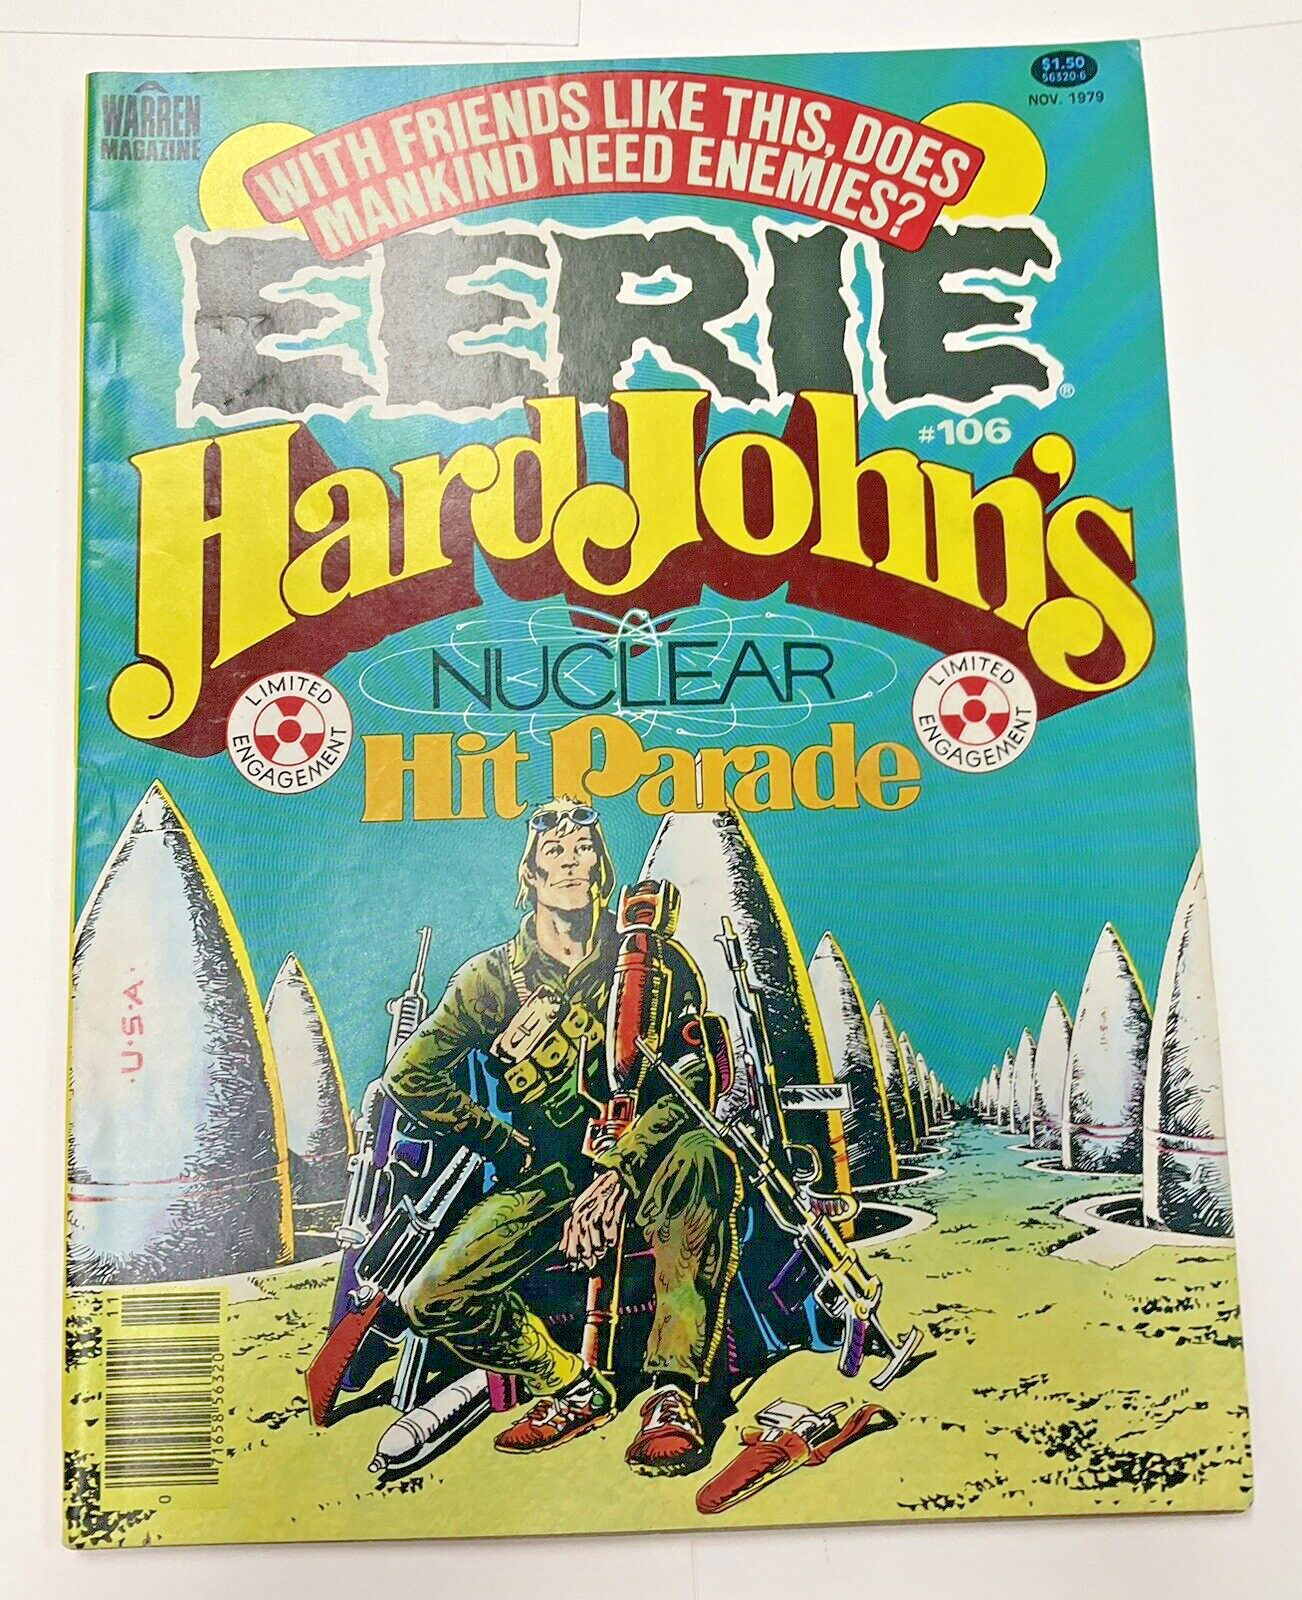 1979 Warren Eerie #105 Hard John’s Nuclear Hit Parade